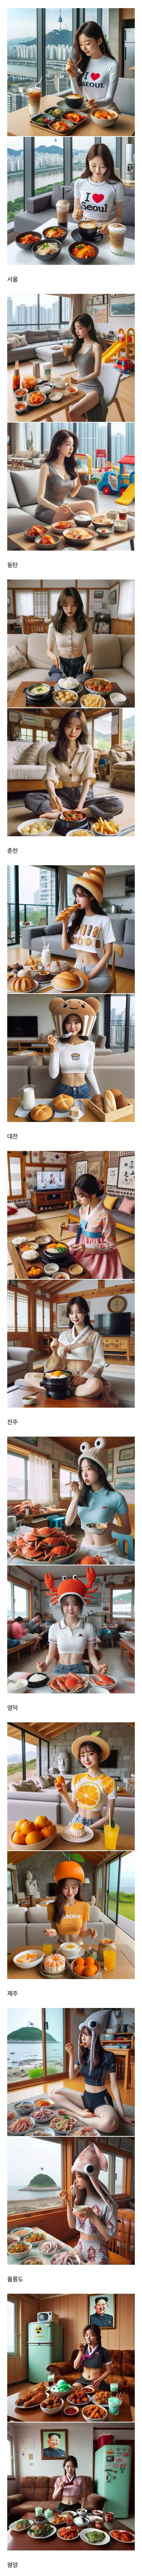 Ai가 그린 아침 식사하는 지역별 여성.jpg | mbong.kr 엠봉